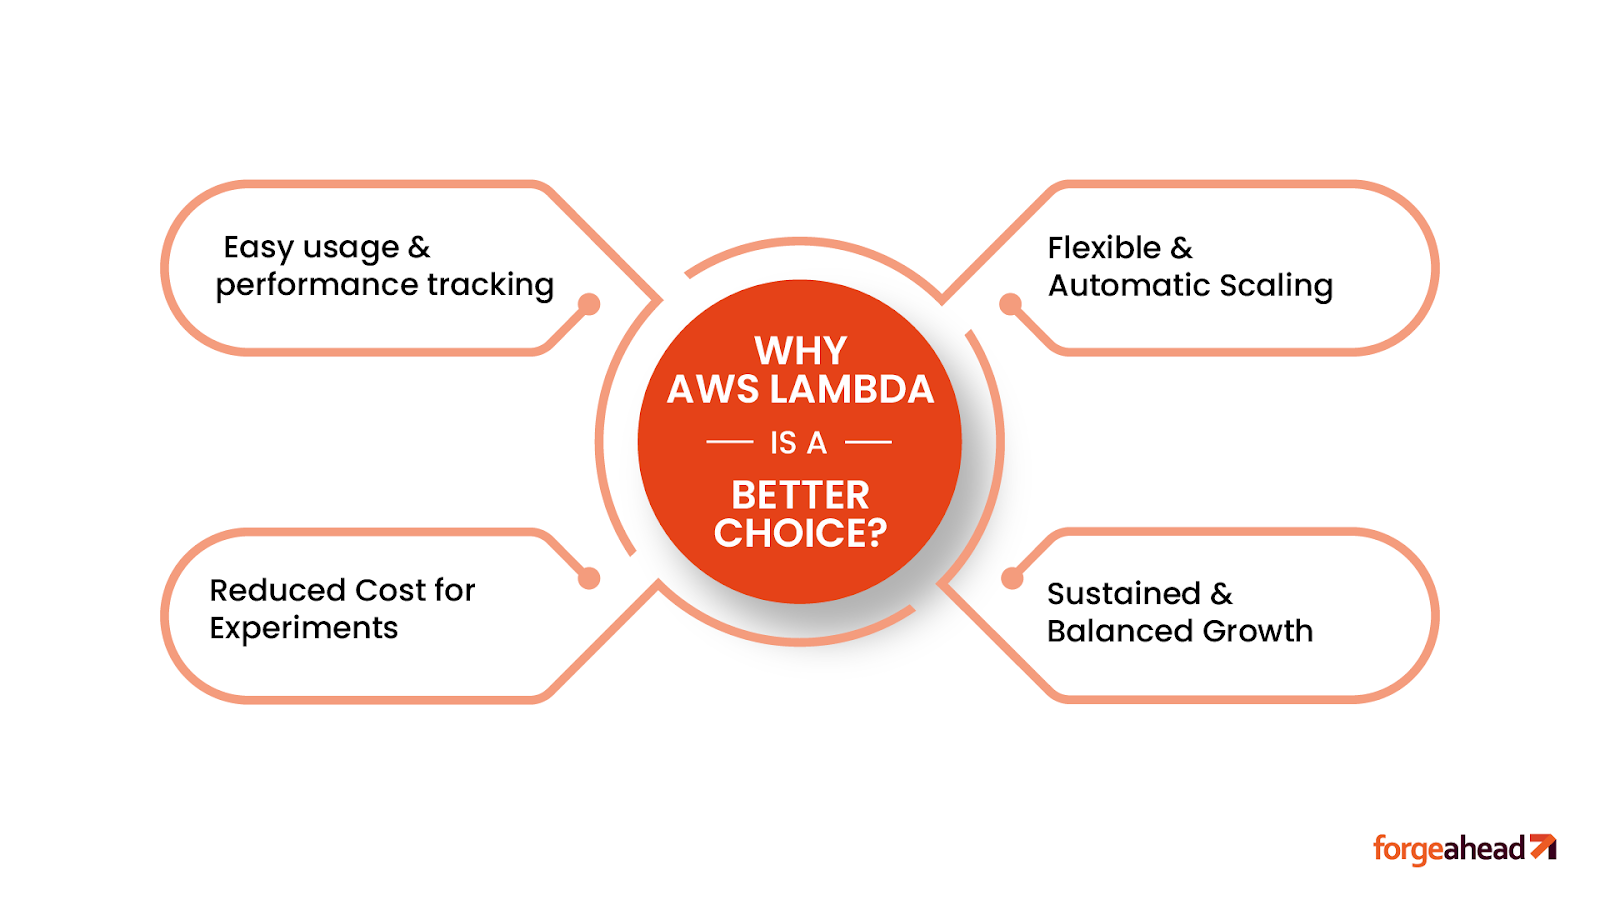 Why AWS Lamda is a better choice?